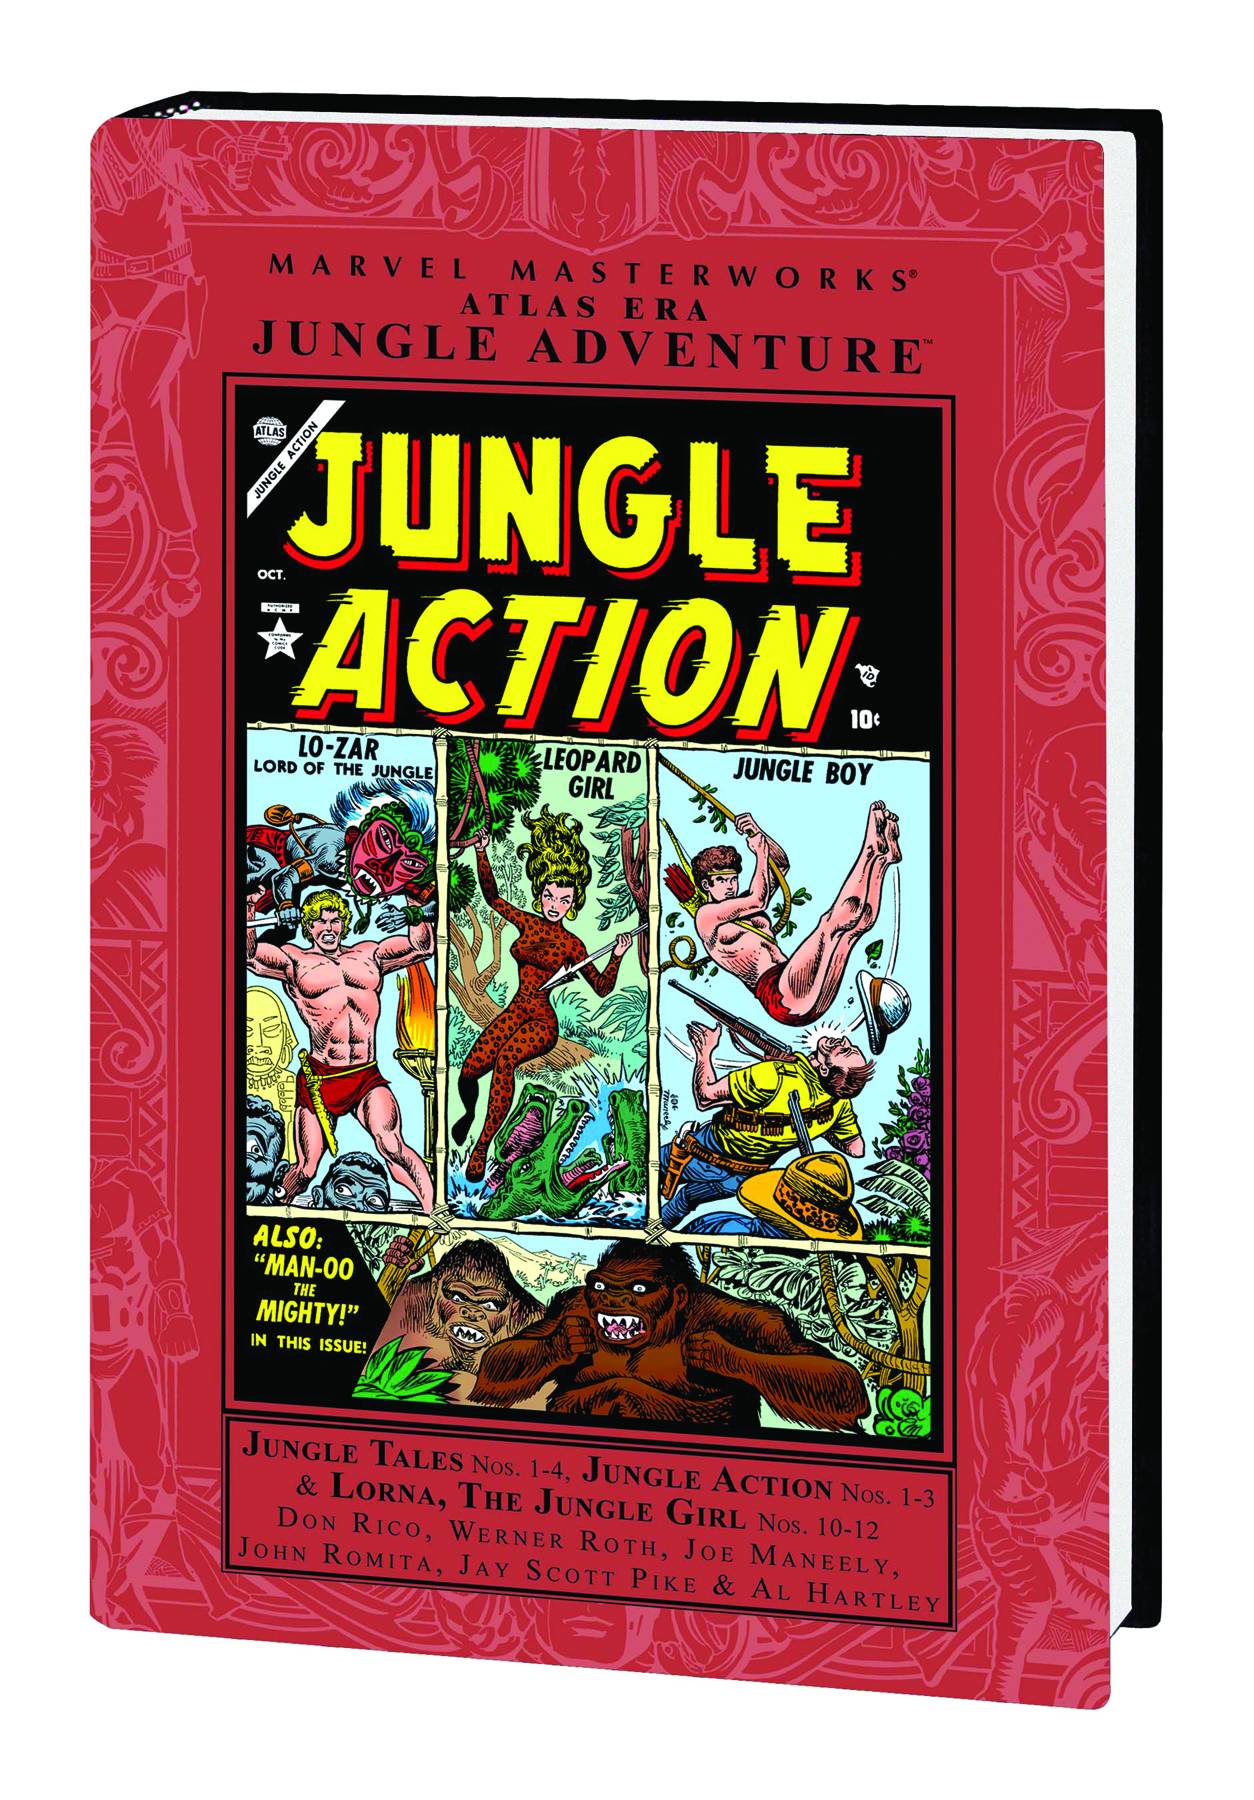 Marvel Masterworks Atlas Era Jungle Adventure Hardcover Volume 2